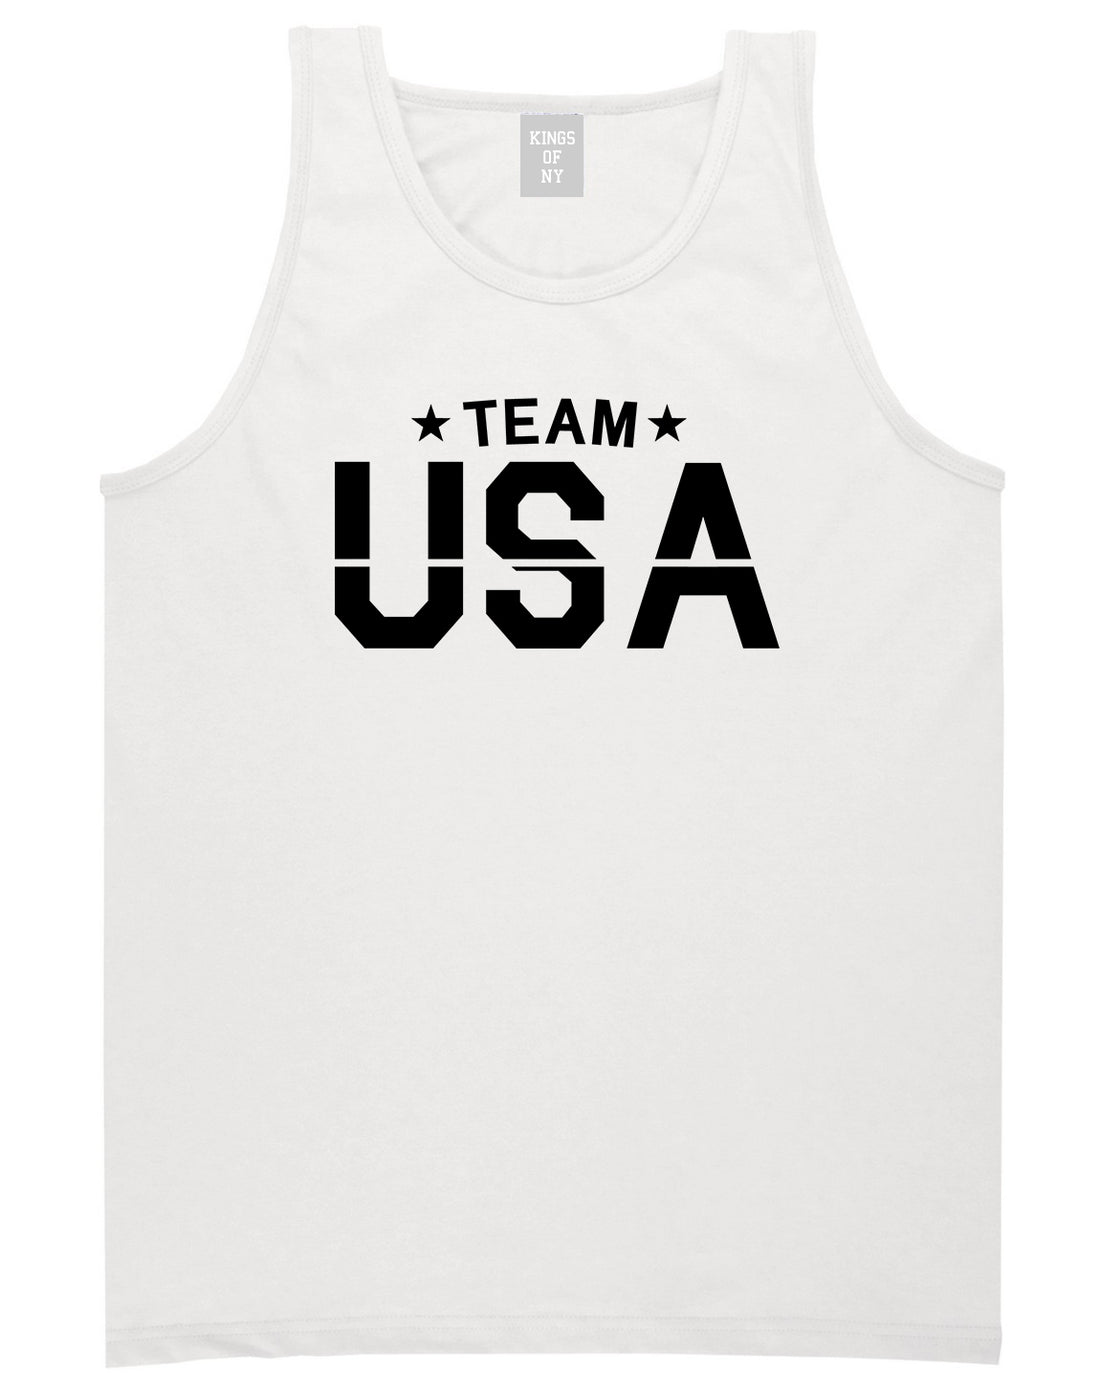 Team USA Mens Tank Top Shirt White by Kings Of NY